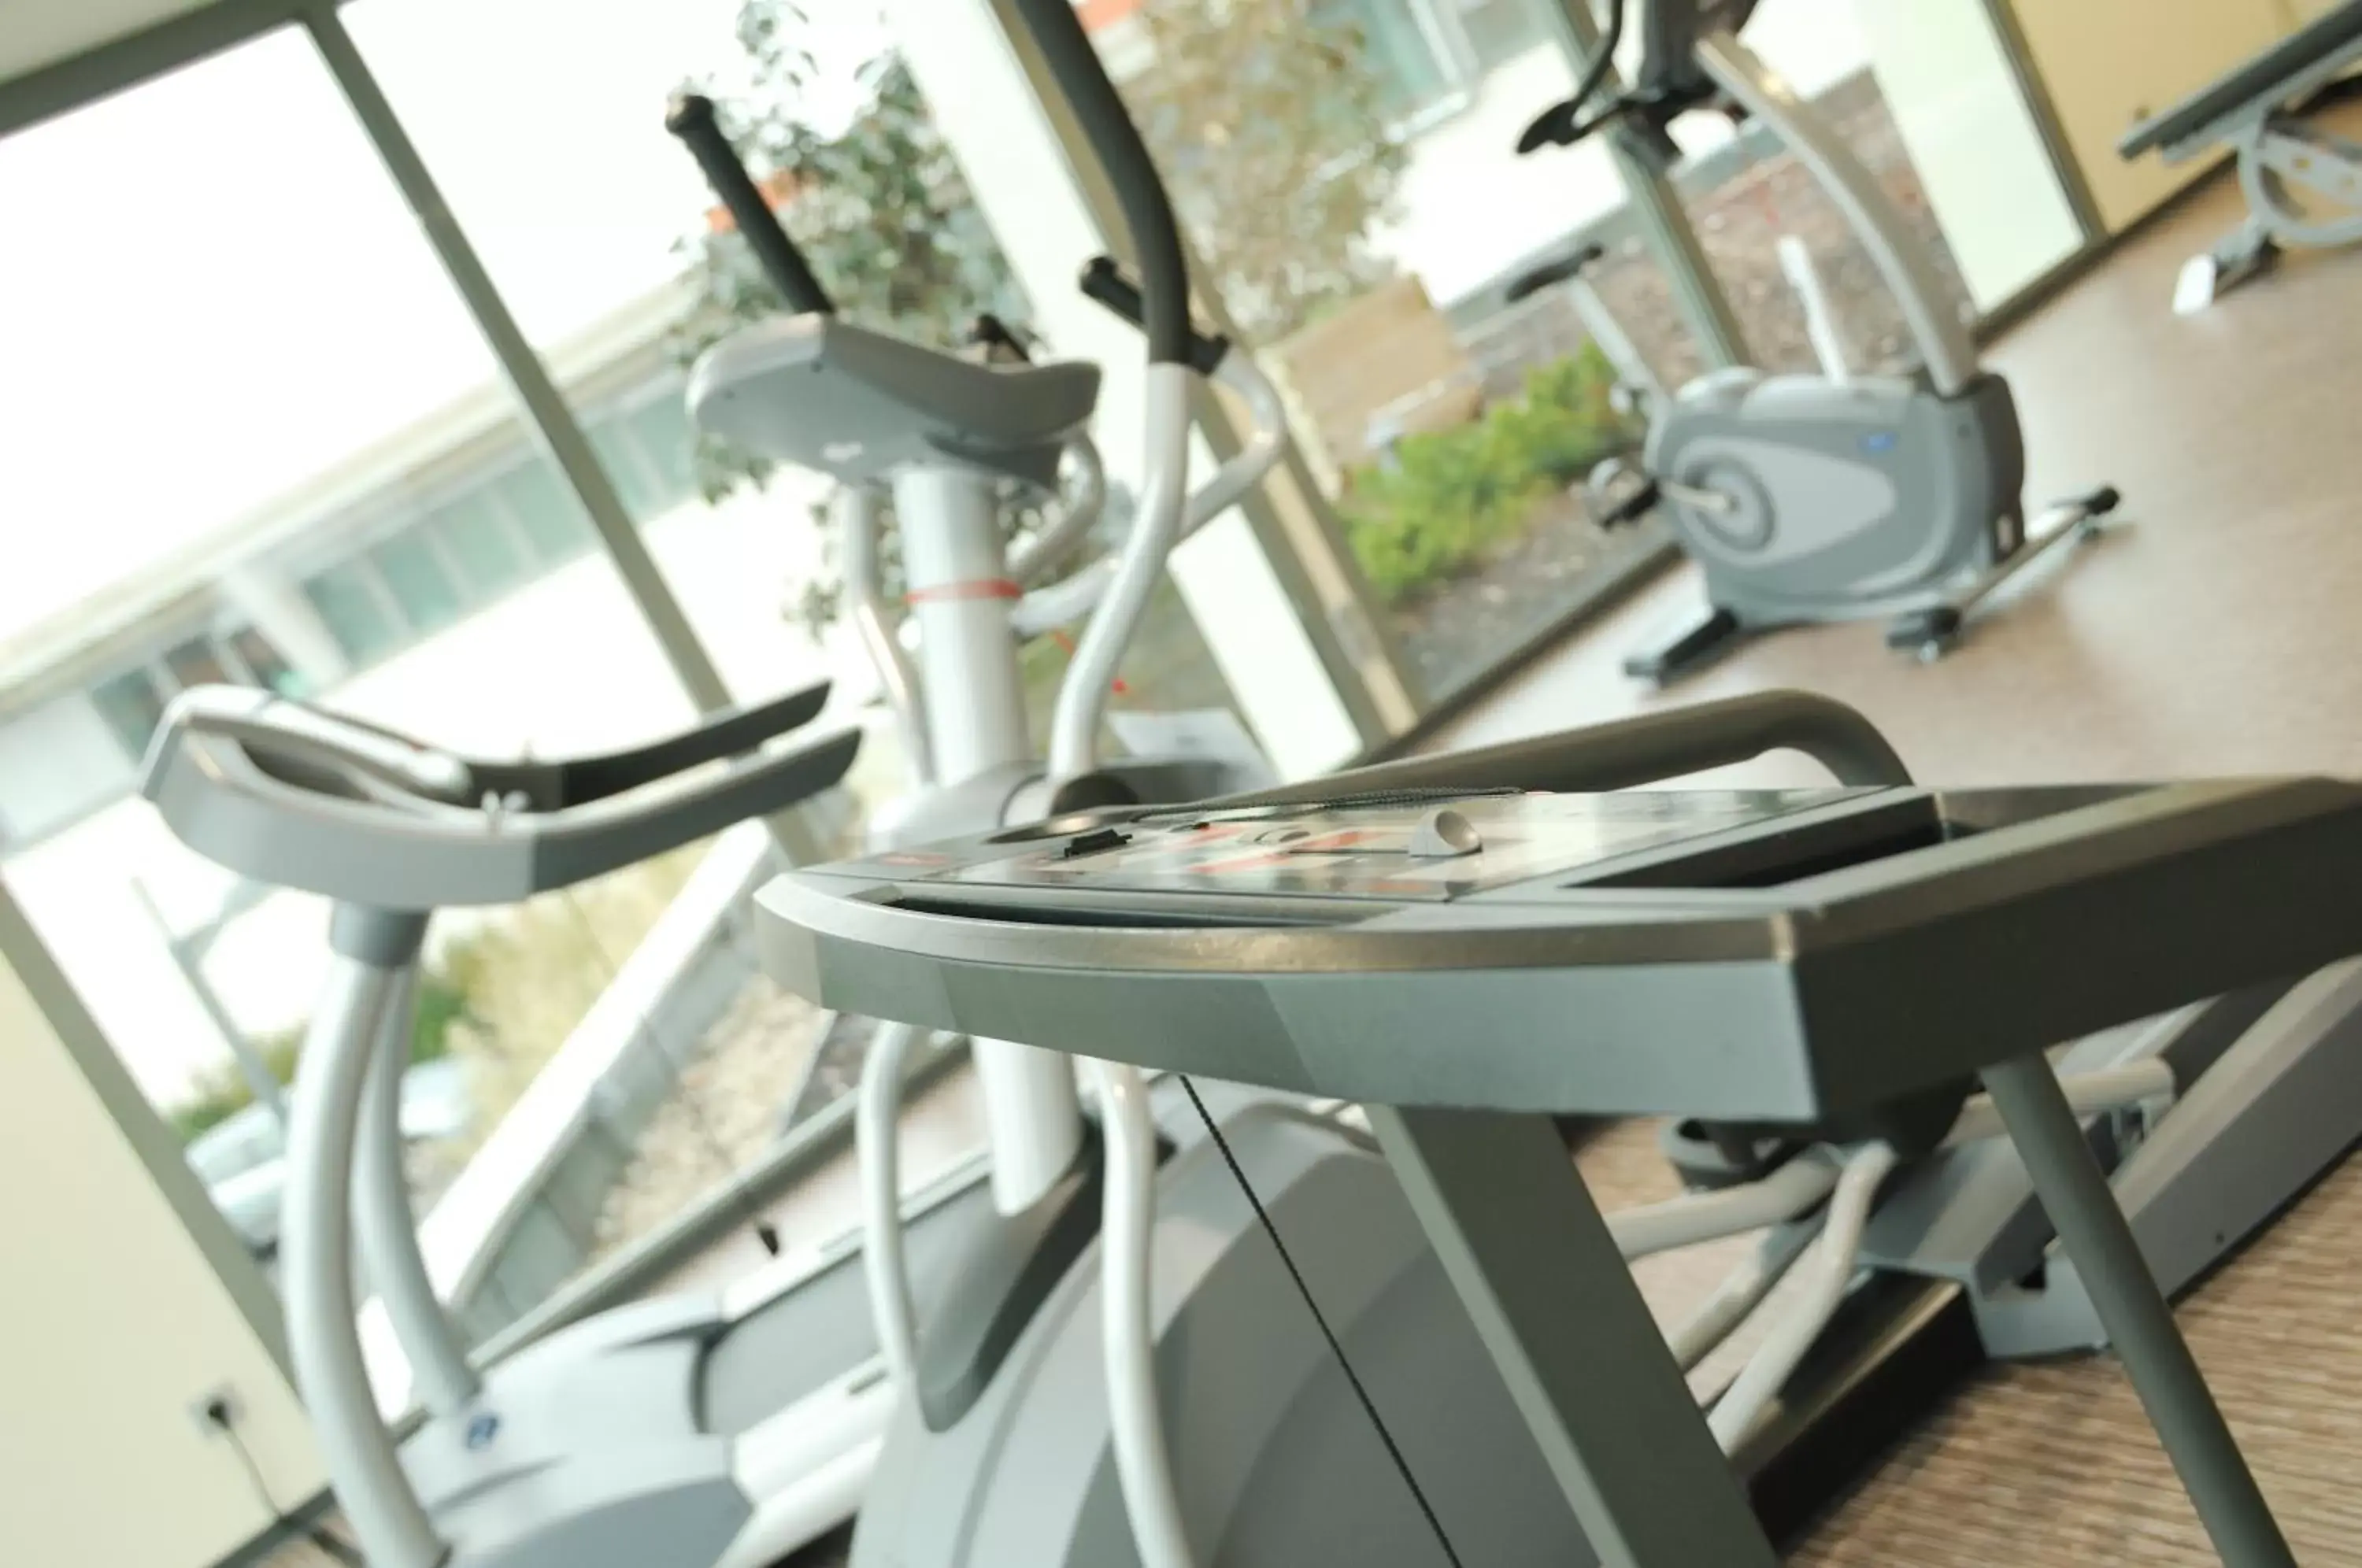 Fitness centre/facilities, Fitness Center/Facilities in Hotel du Pasino